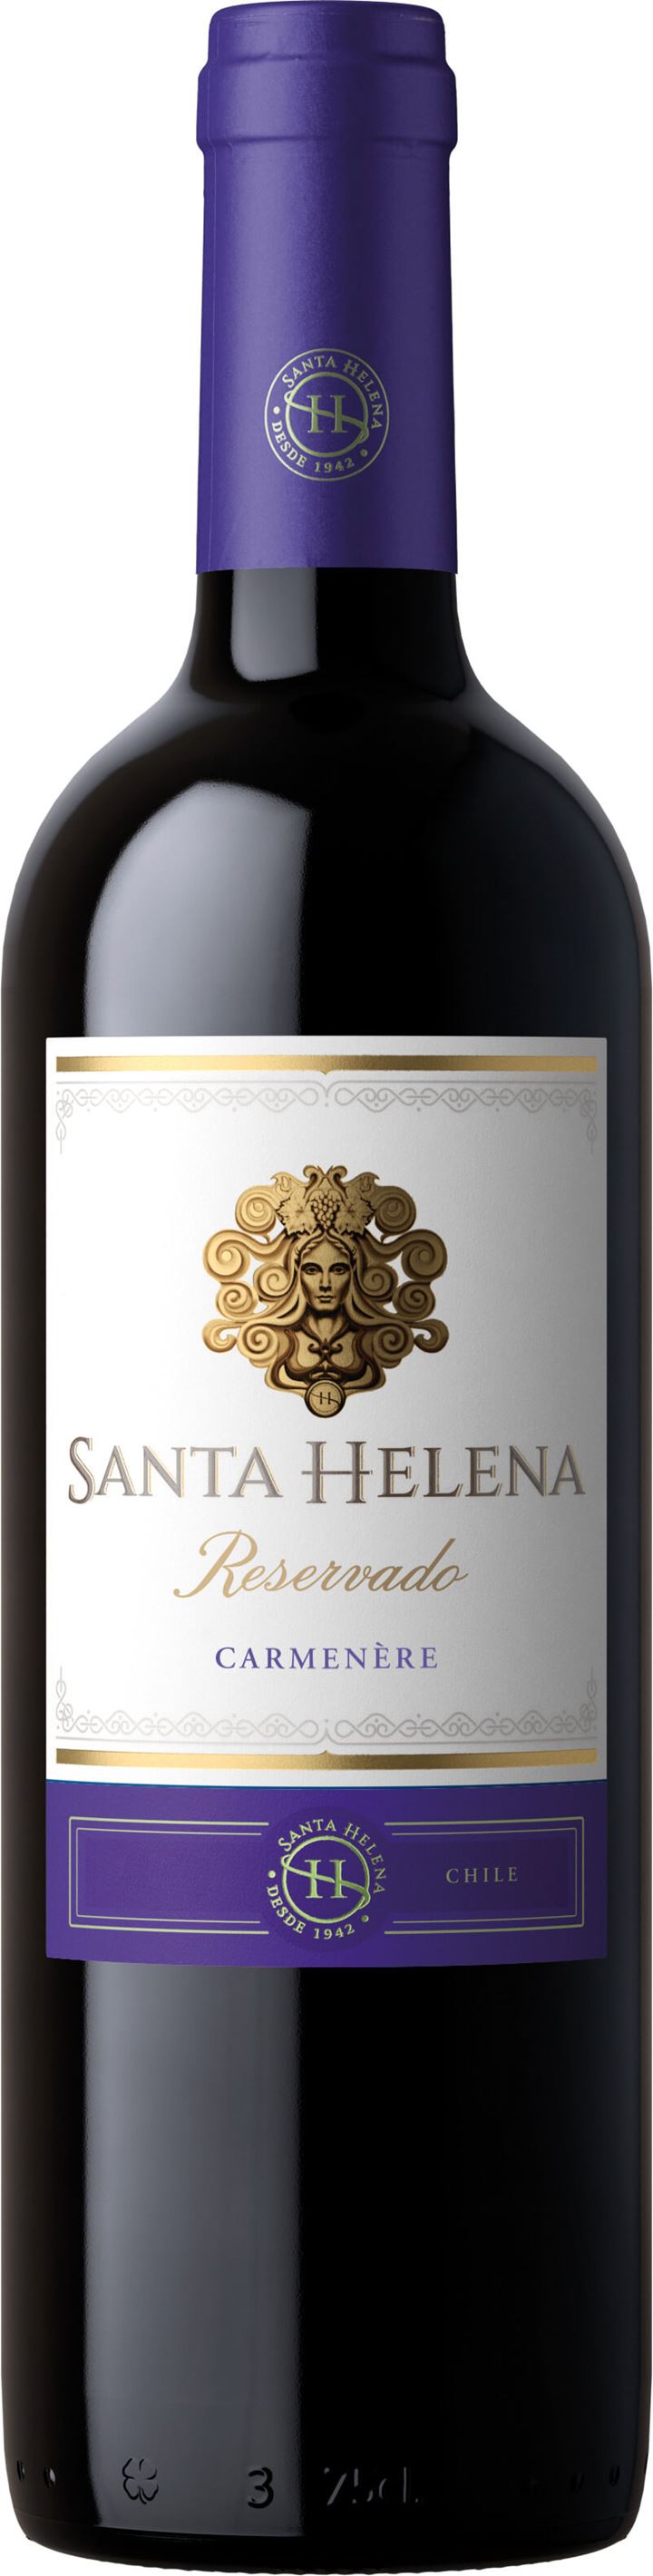 Vinho Santa Helena Reservado Carmenere Tinto 750ml